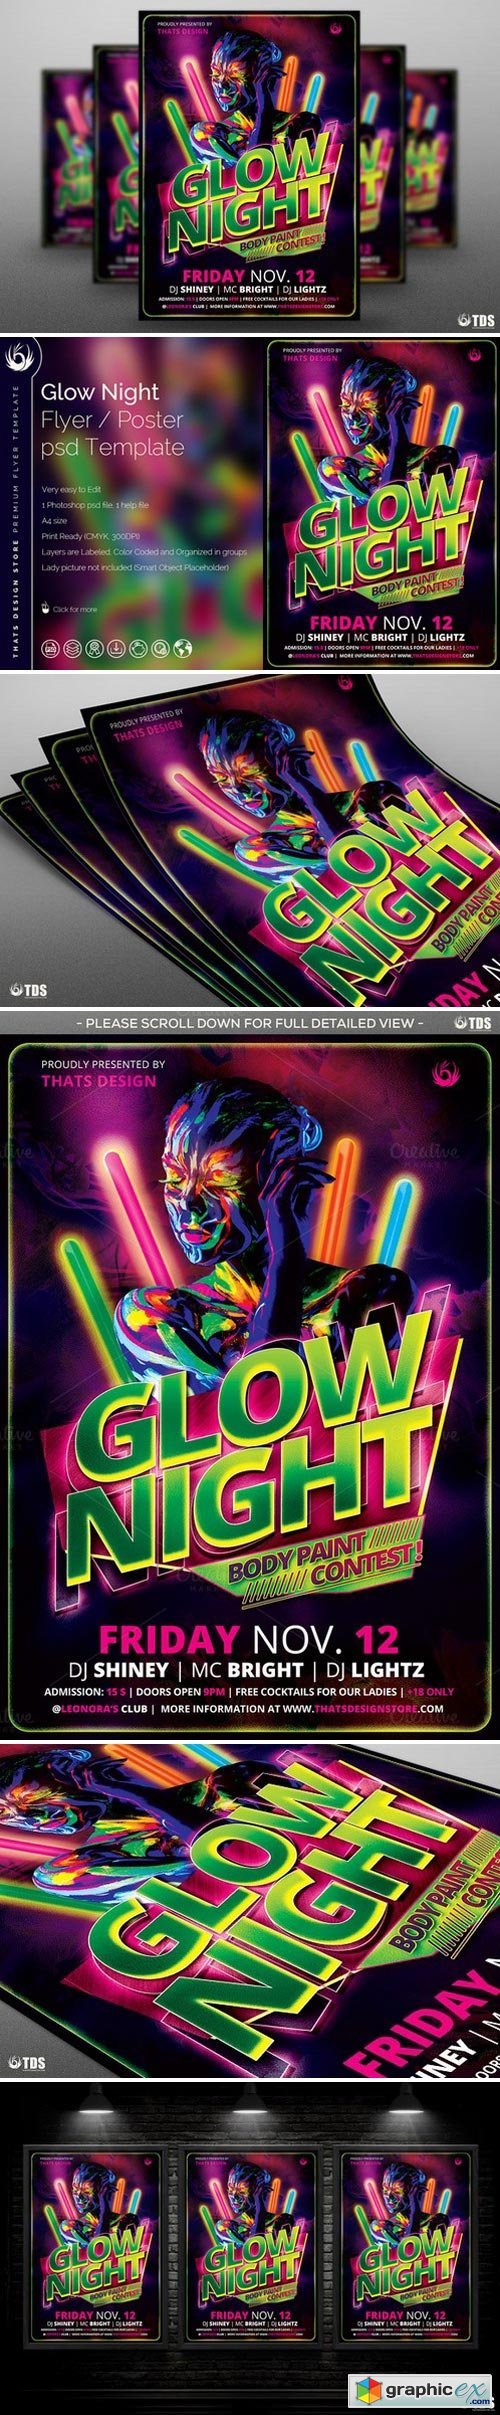 Glow Night Flyer Template